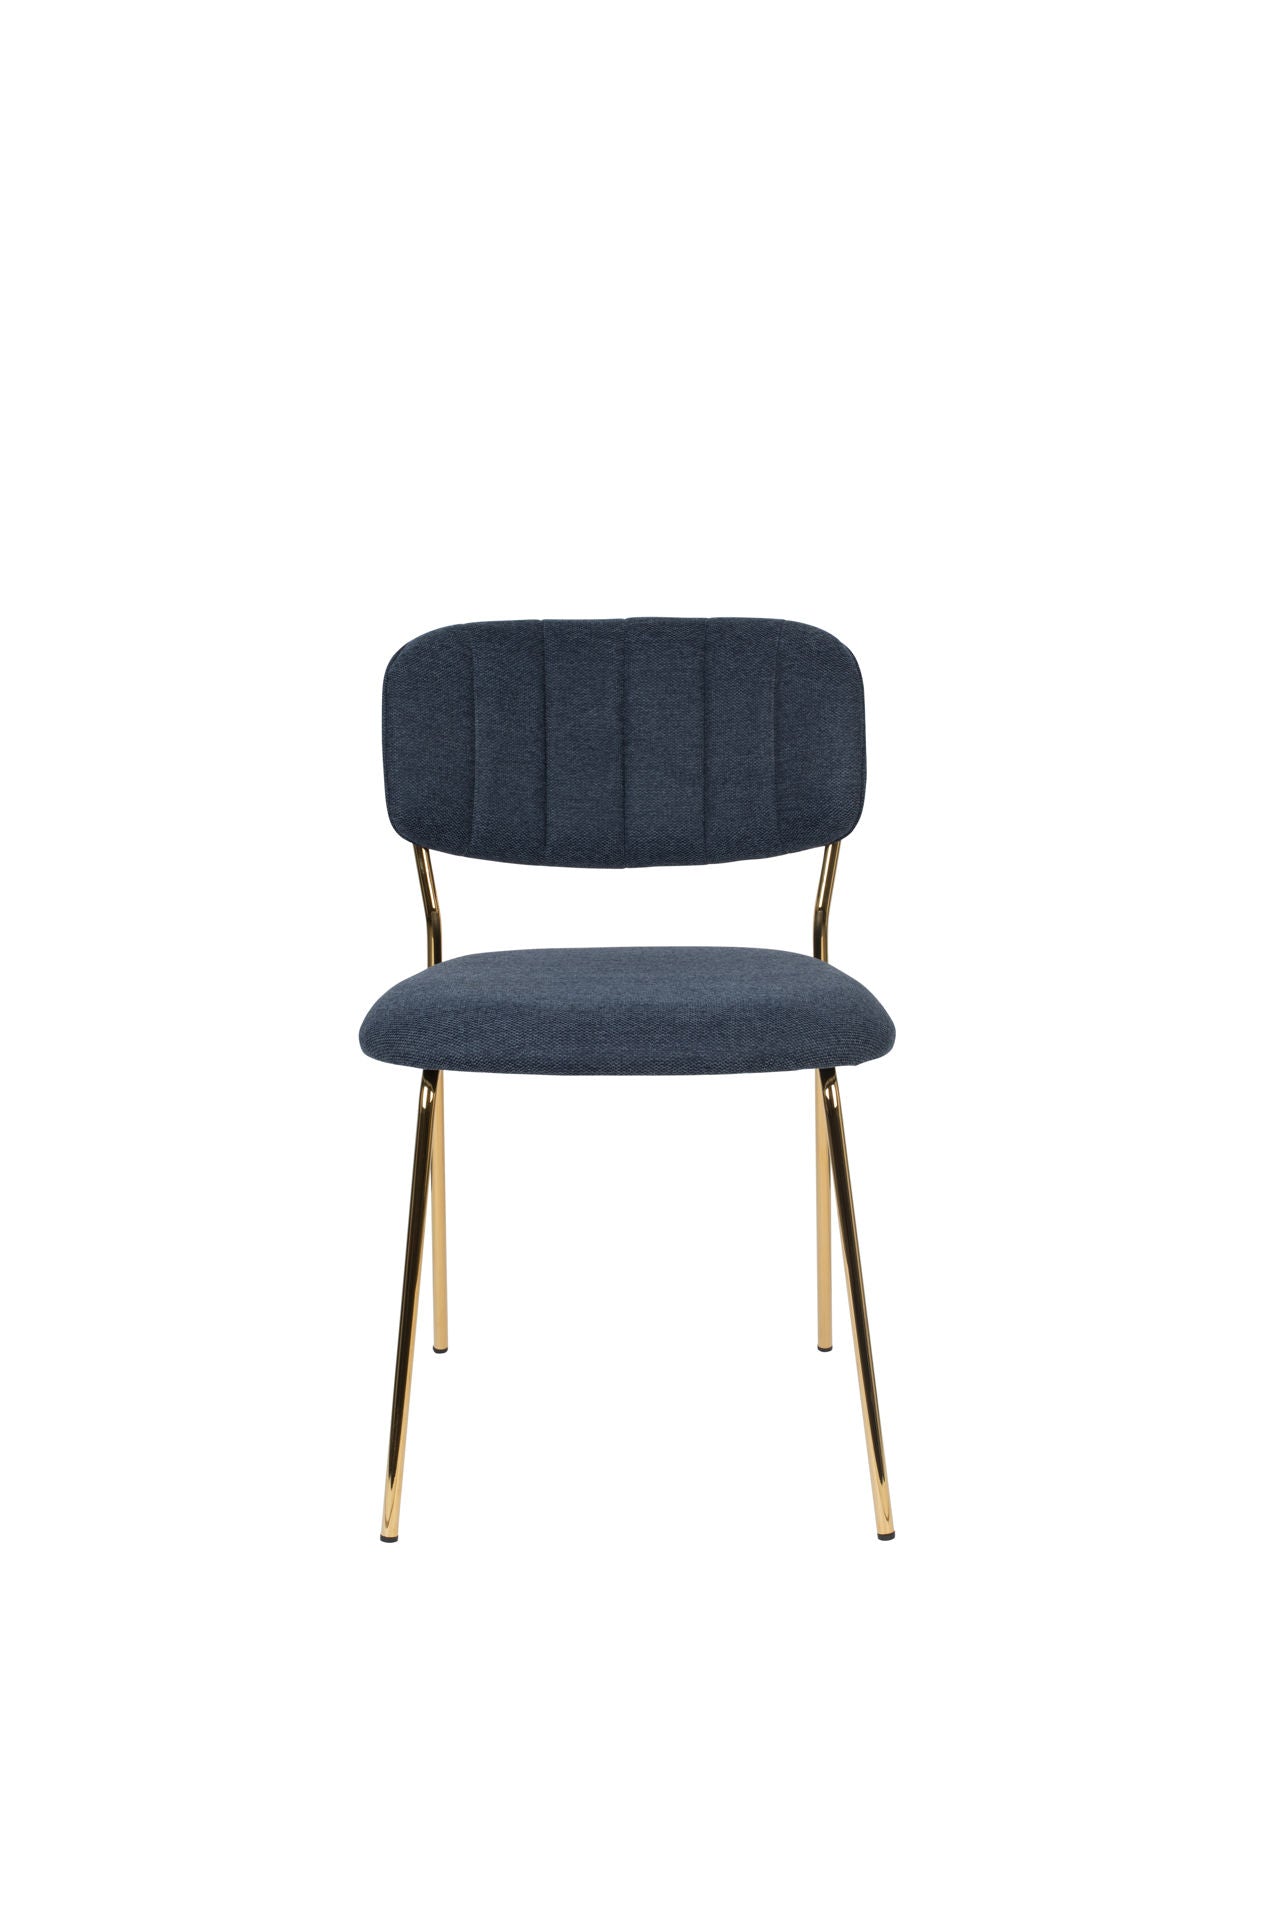 Nancy's Kings Grant Chair - Retro - Goud, Blauw - Polyester, Staal, Multiplex - 56 cm x 49 cm x 78 cm